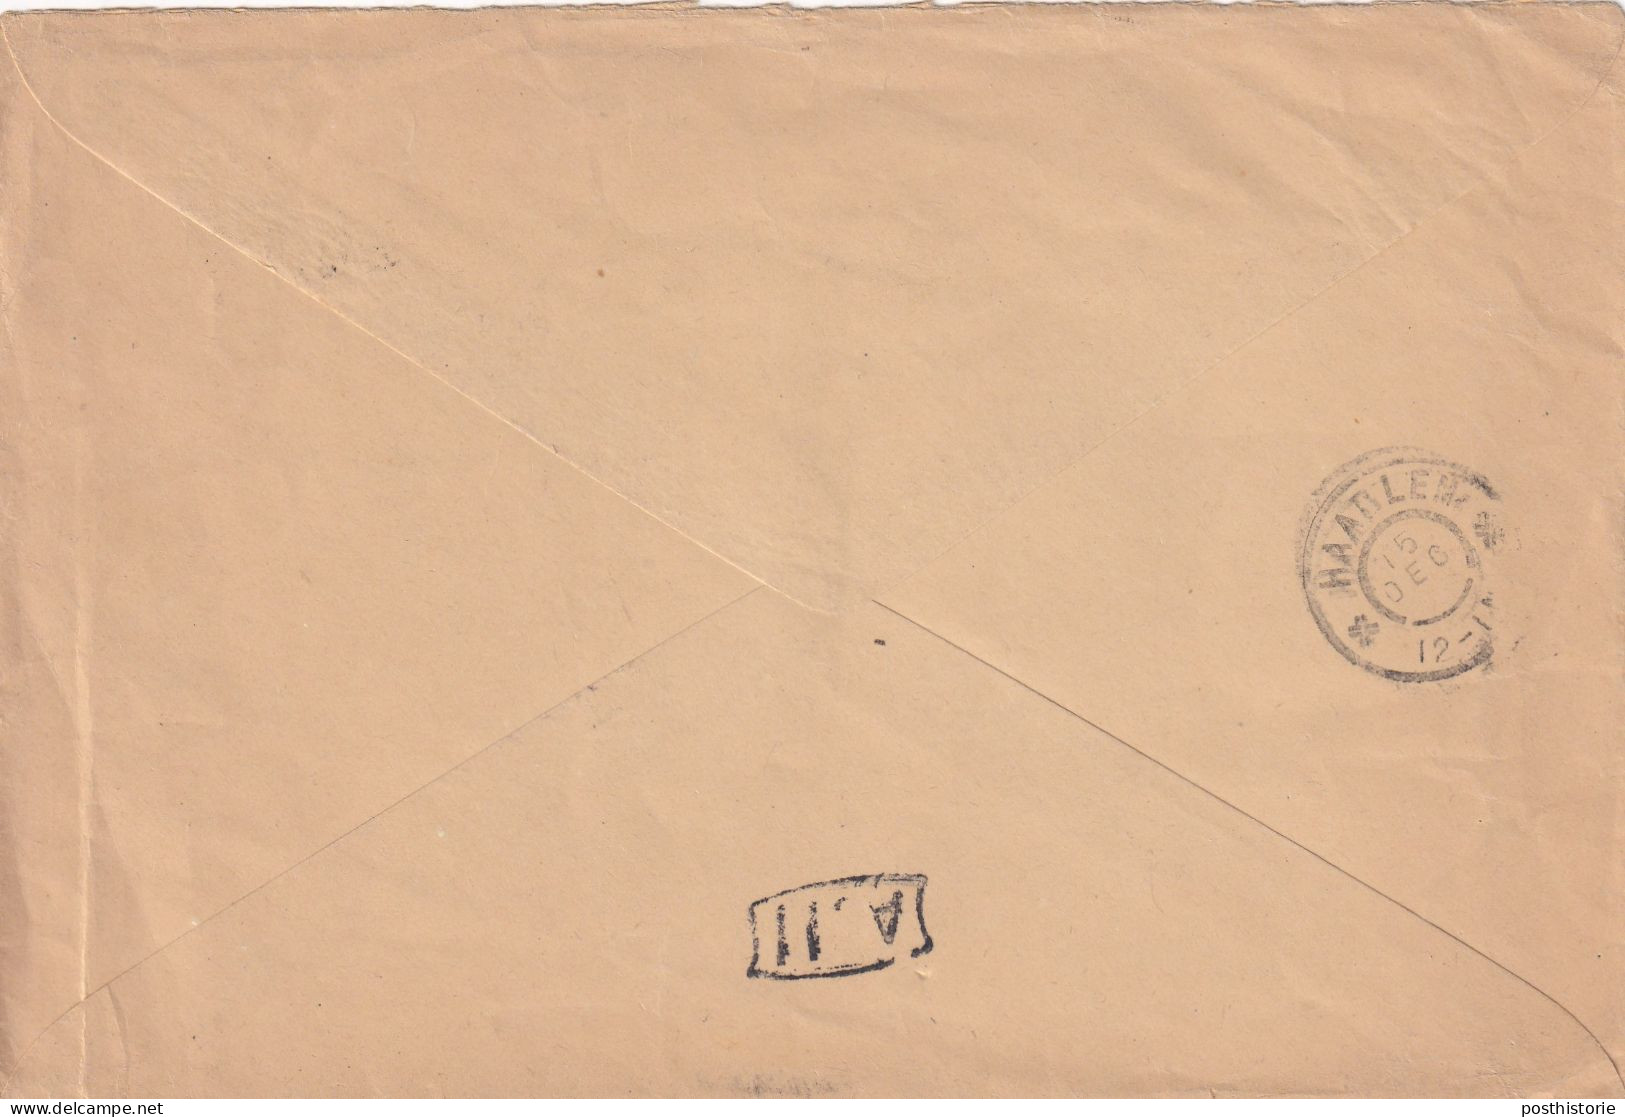 Envelop 15 Dec 1907 Arnhem Oldenzaal B (spoor Grootrond) Naar Haarlem (grootrond Zonder Jaartal) - Poststempels/ Marcofilie